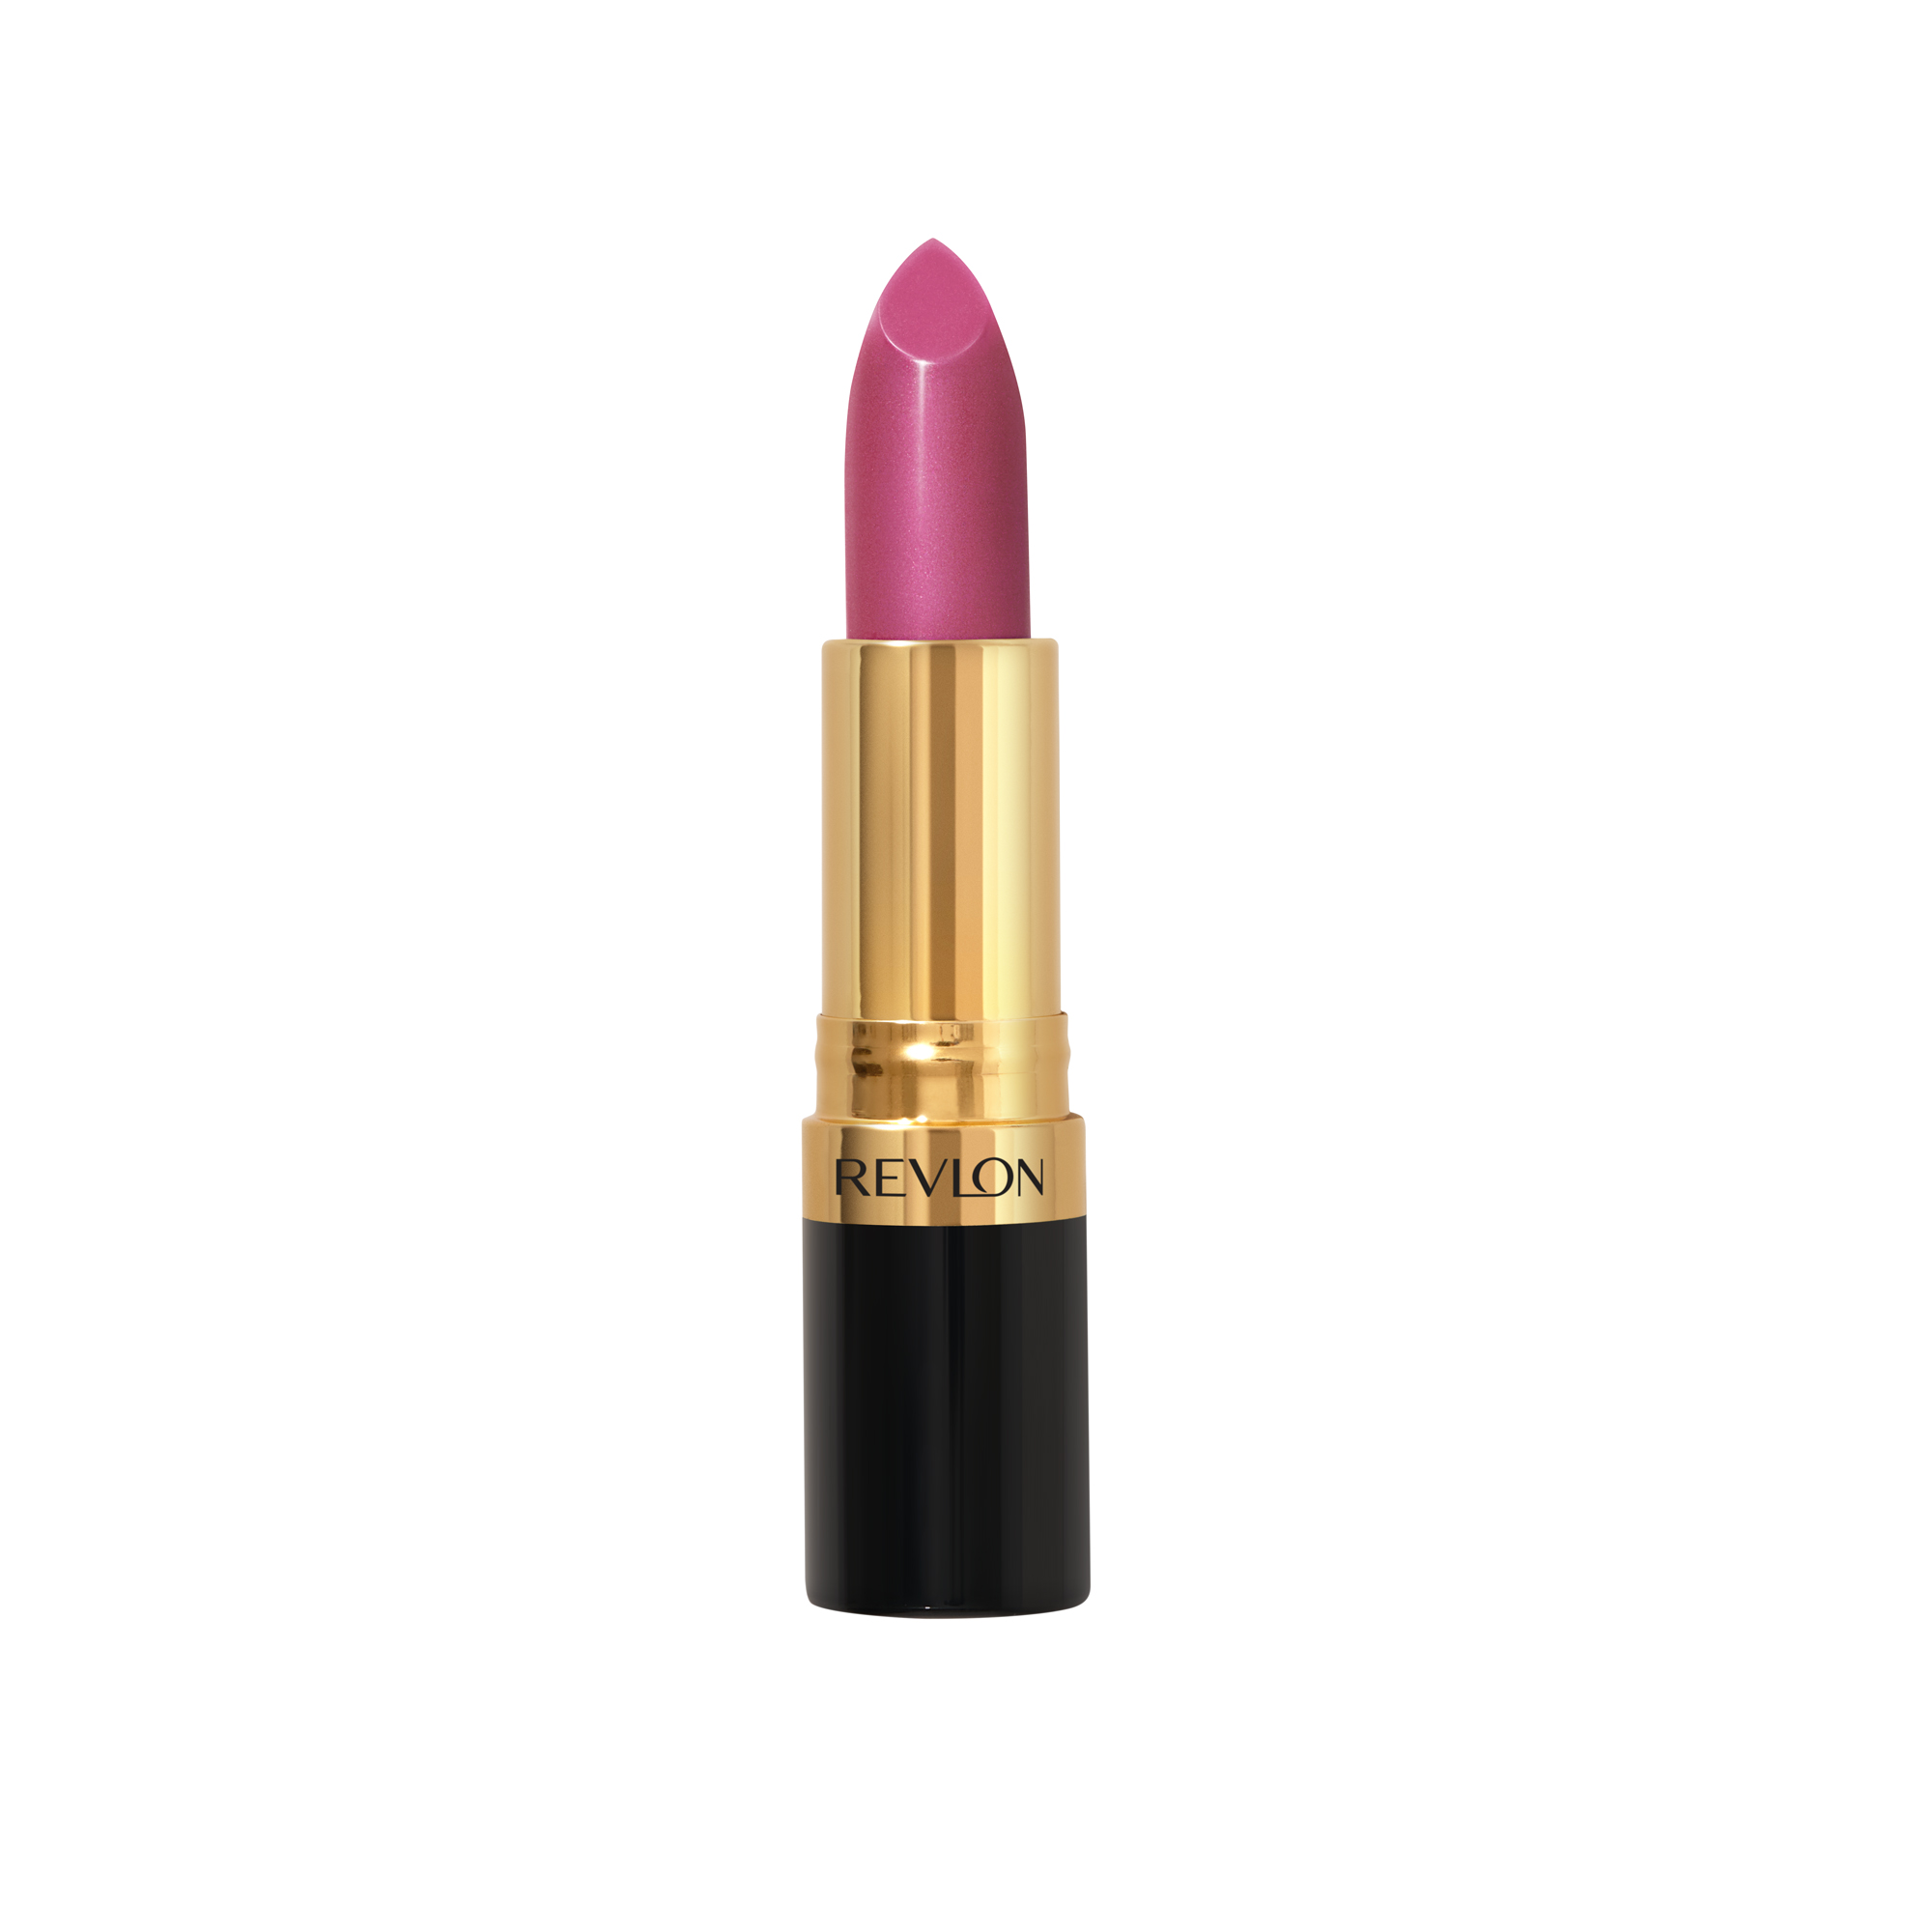 Revlon Super Lustrous Lipstick, Fuchsia Shock - image 1 of 7